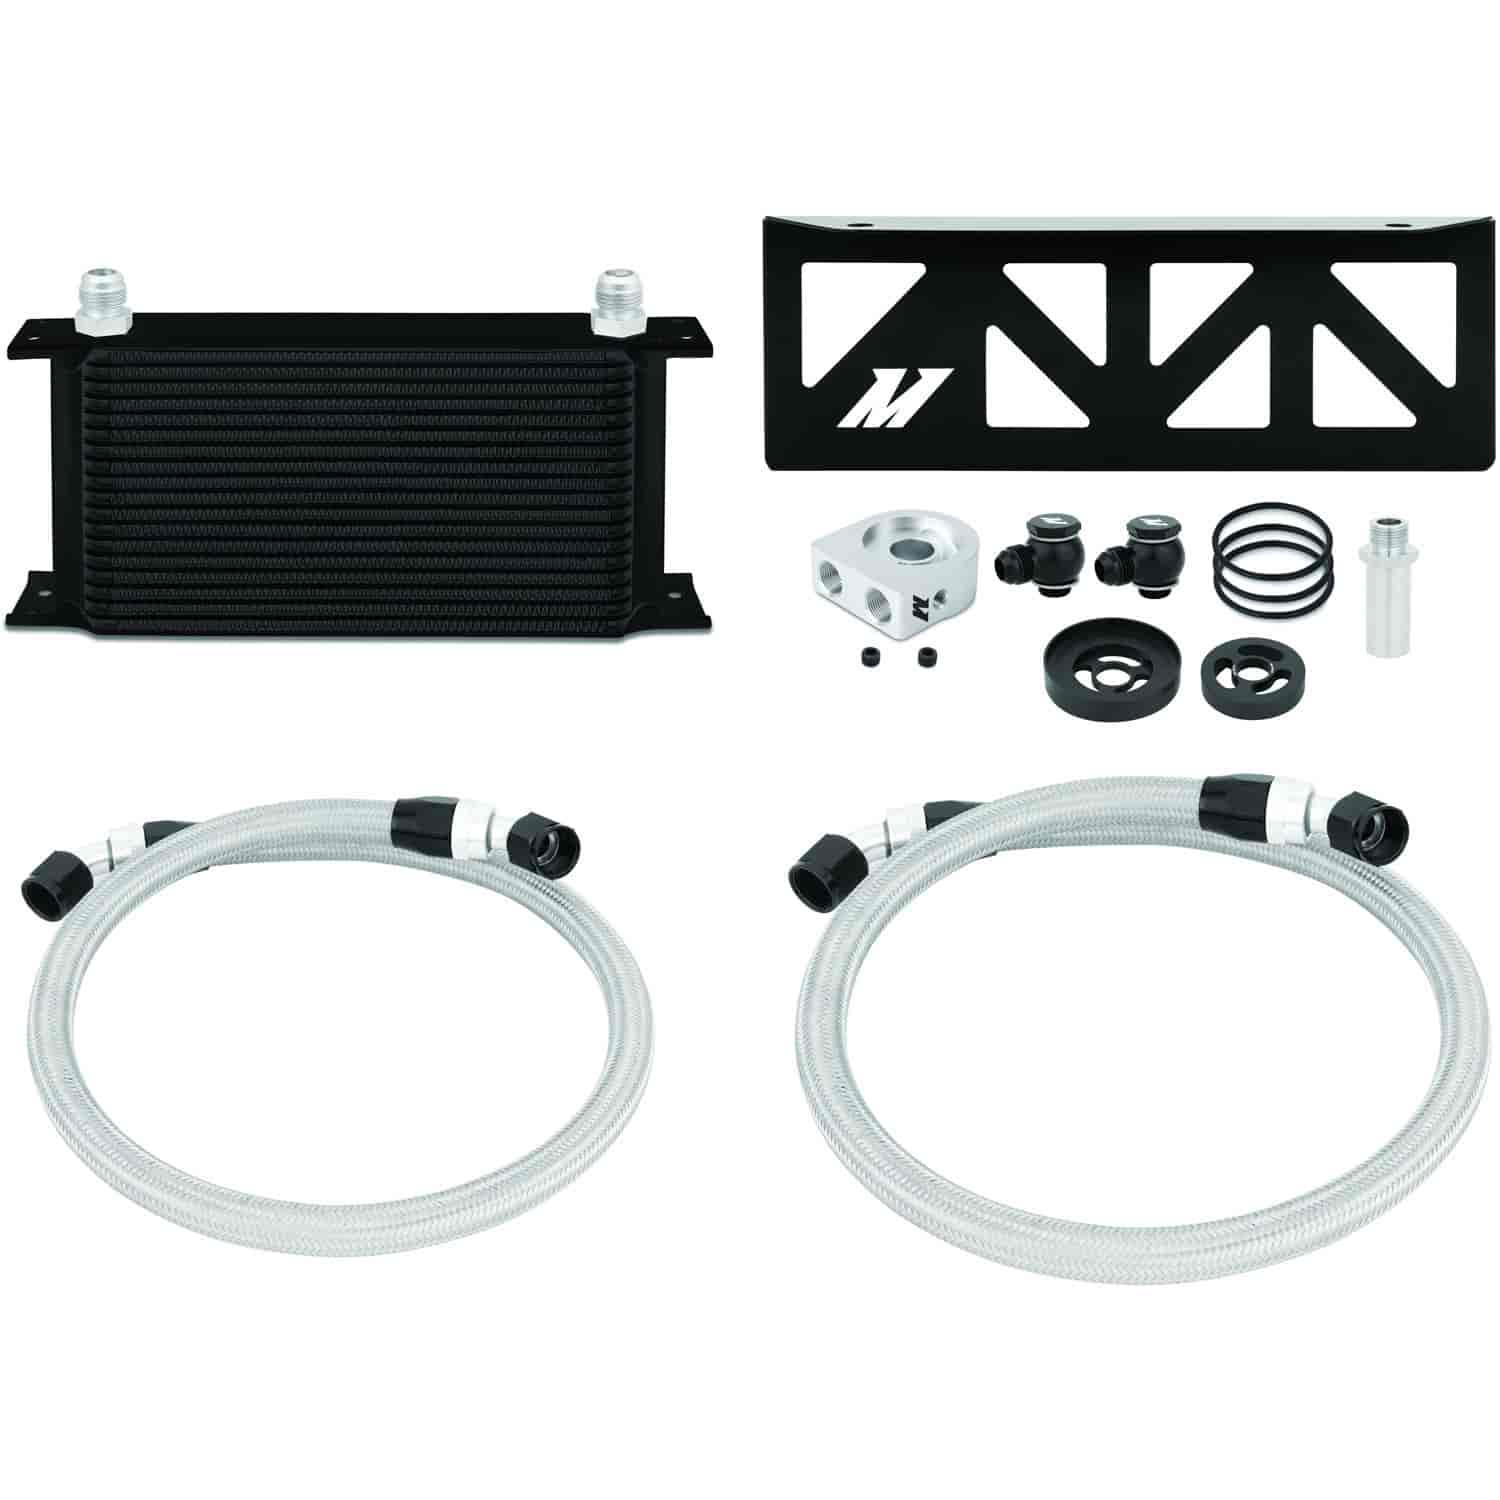 Subaru BRZ / Scion FR-S Oil Cooler Kit Black - MFG Part No. MMOC-BRZ-13BK